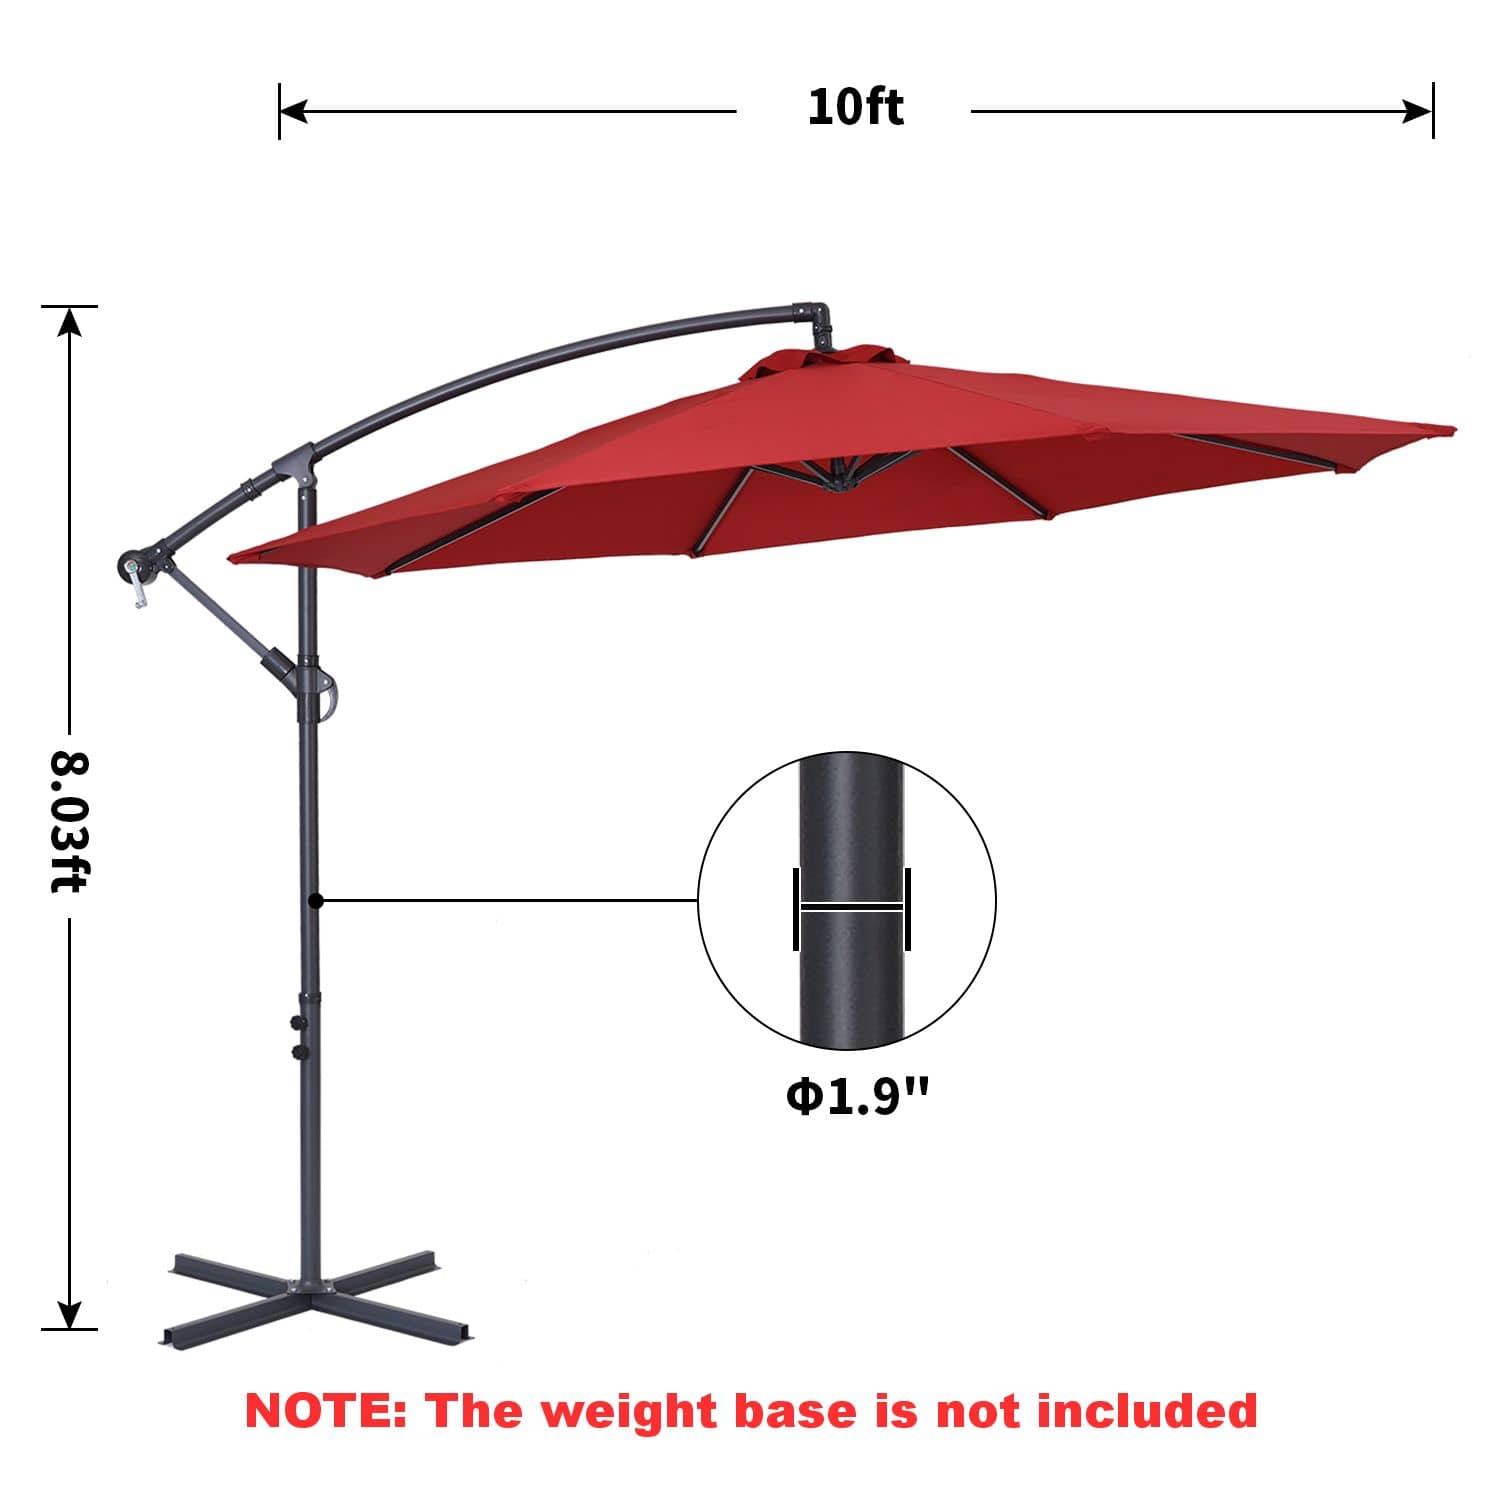 10' Offset Patio Umbrella Dimensions